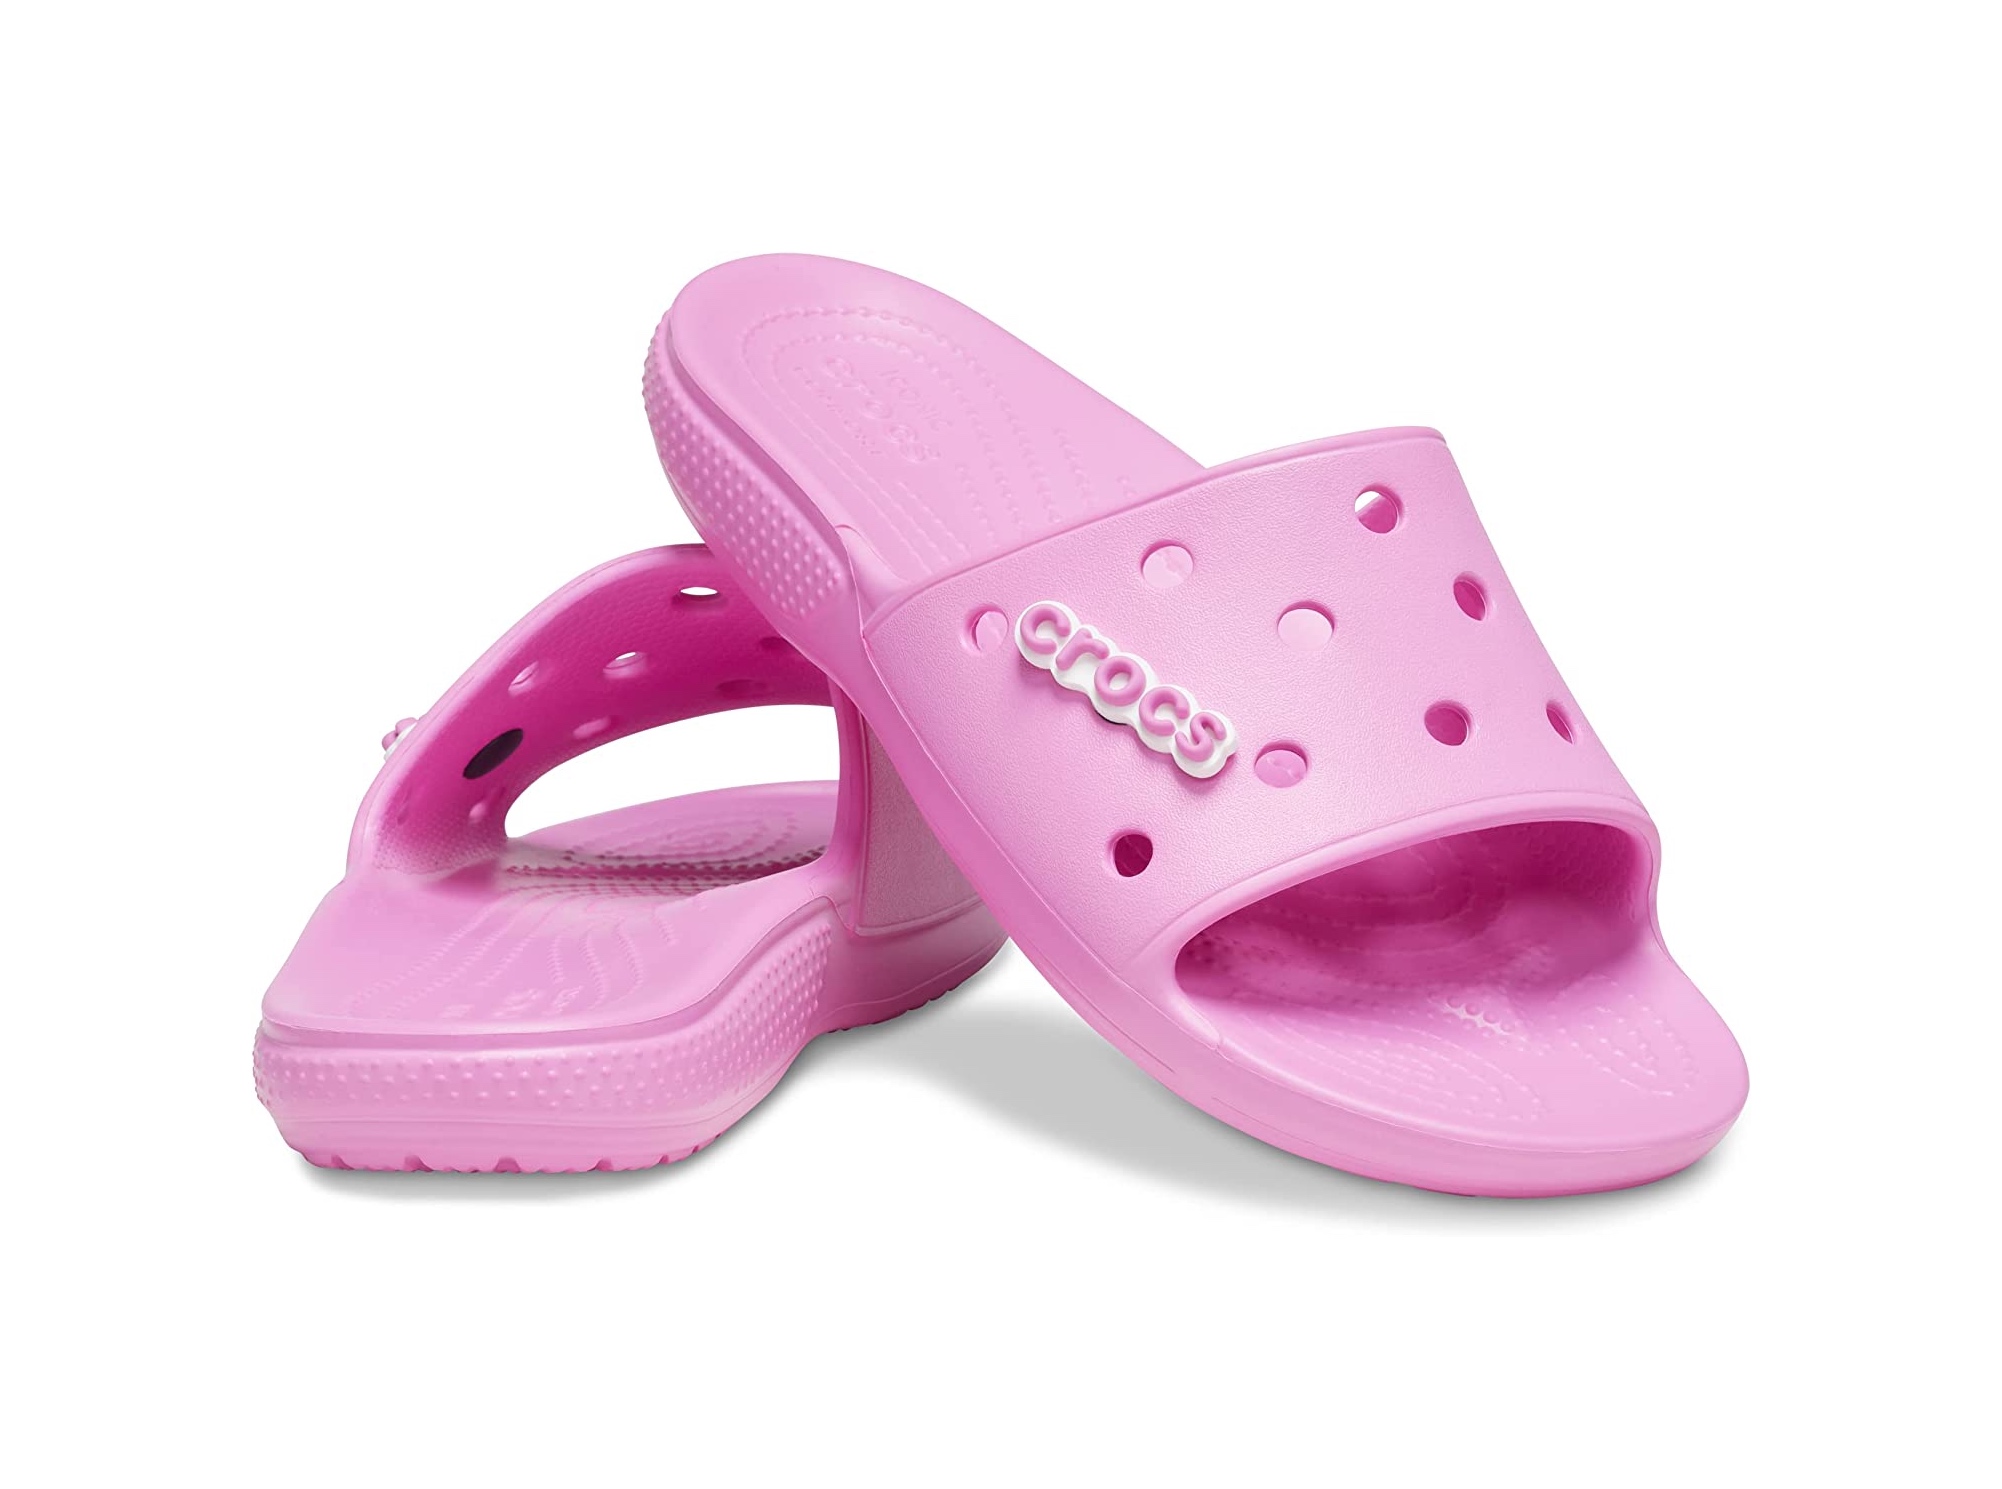 Crocs Classic Slide Sandals